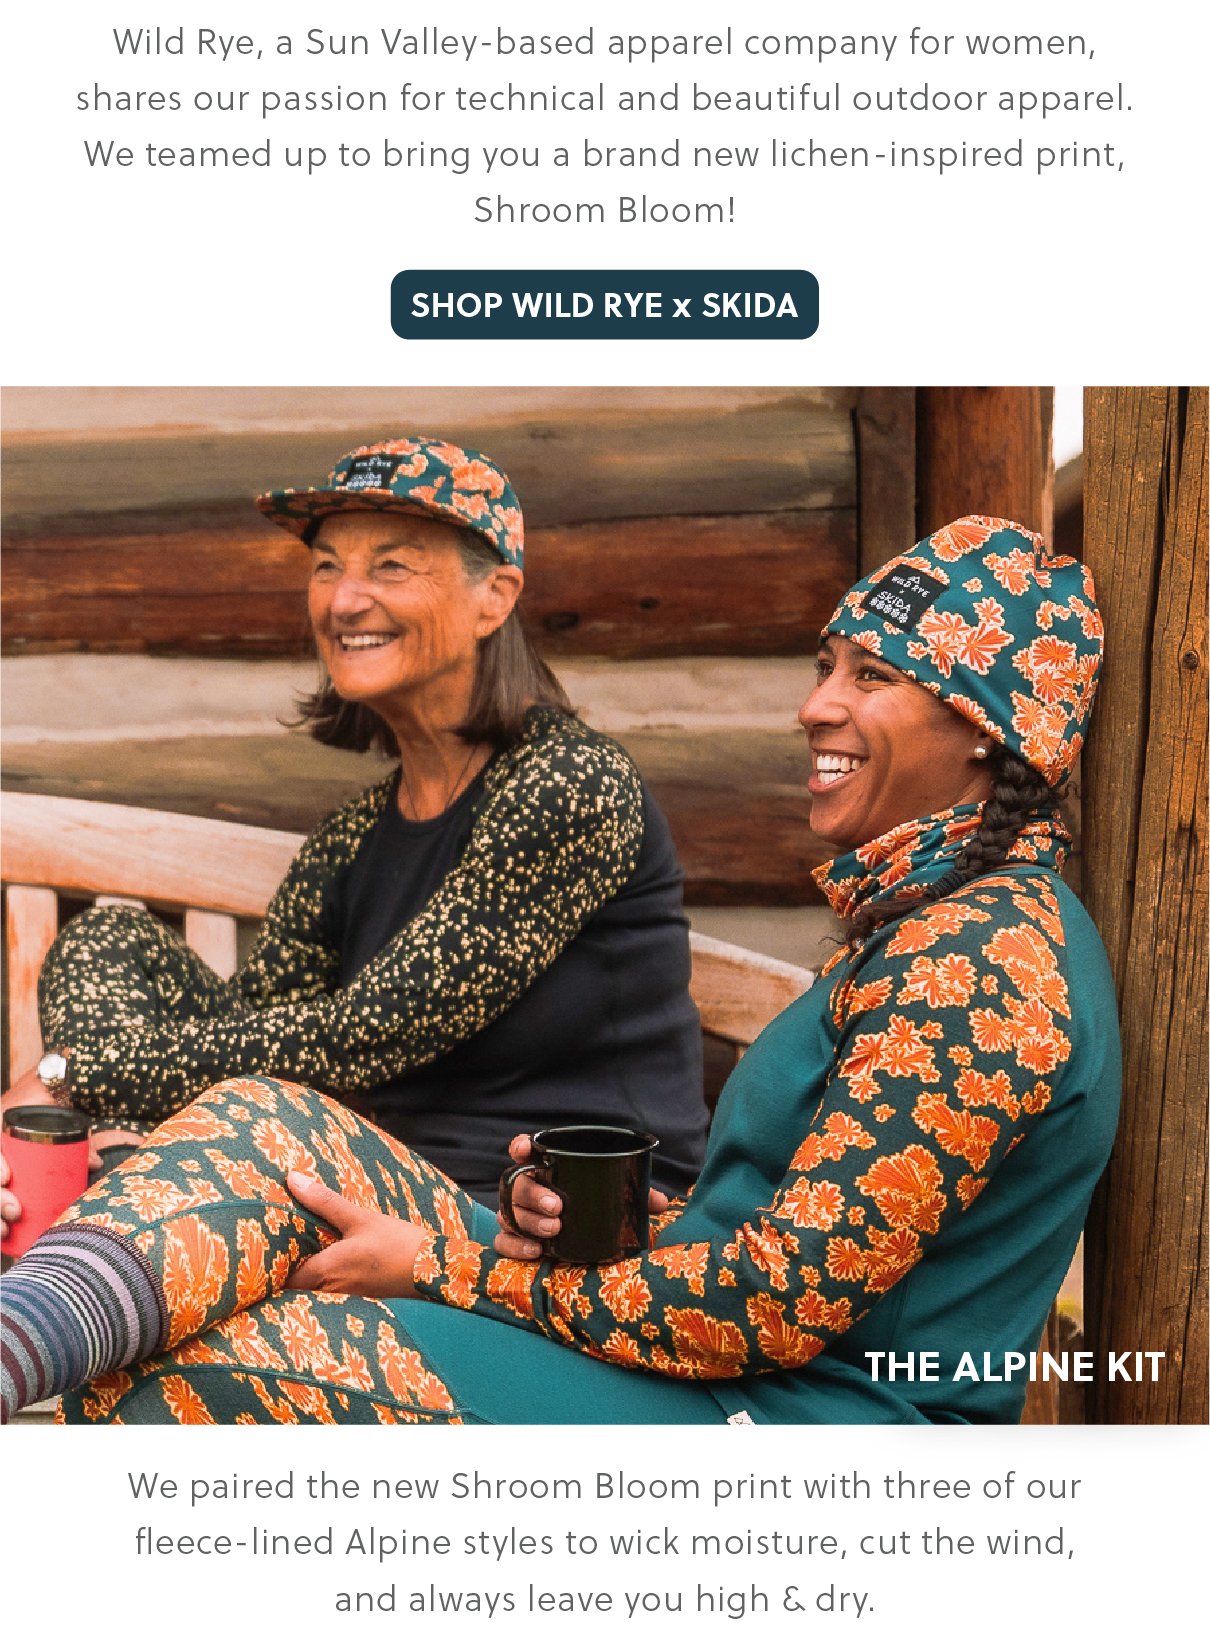 Skida Headwear & Accessories: Our 4th Annual Wild Rye x Skida Collaboration